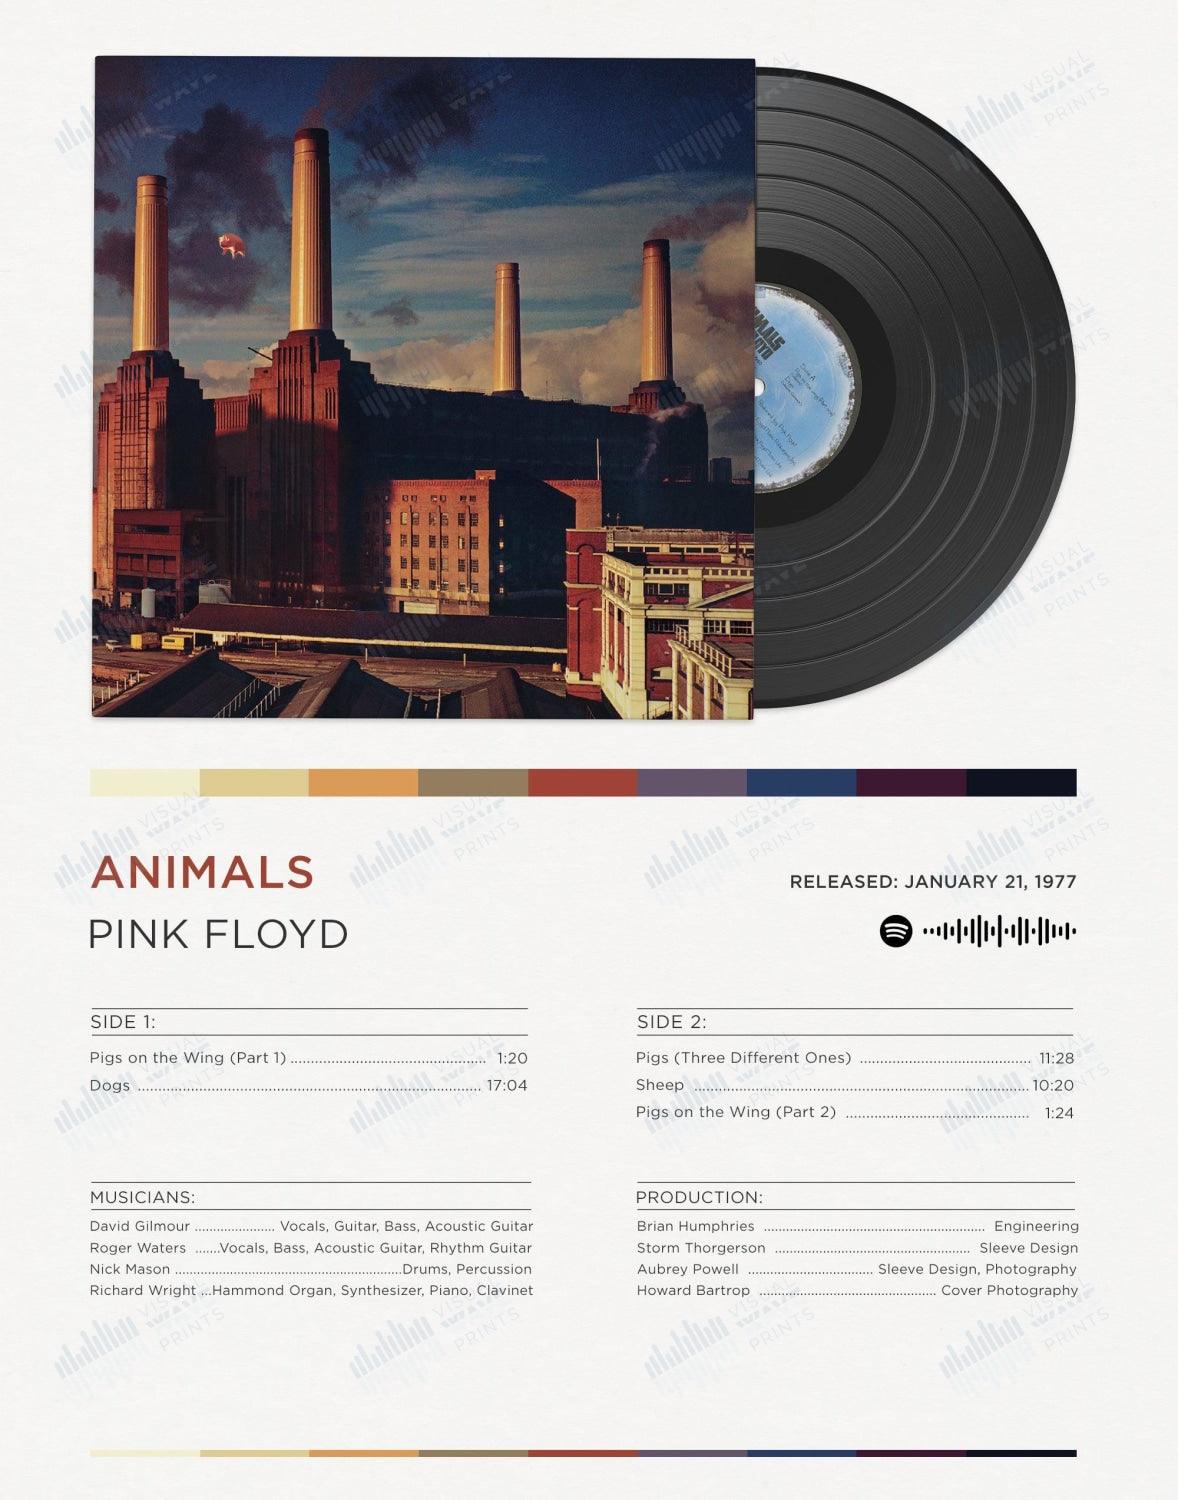 Album Art: Animals by Pink Floyd - Visual Wave Prints